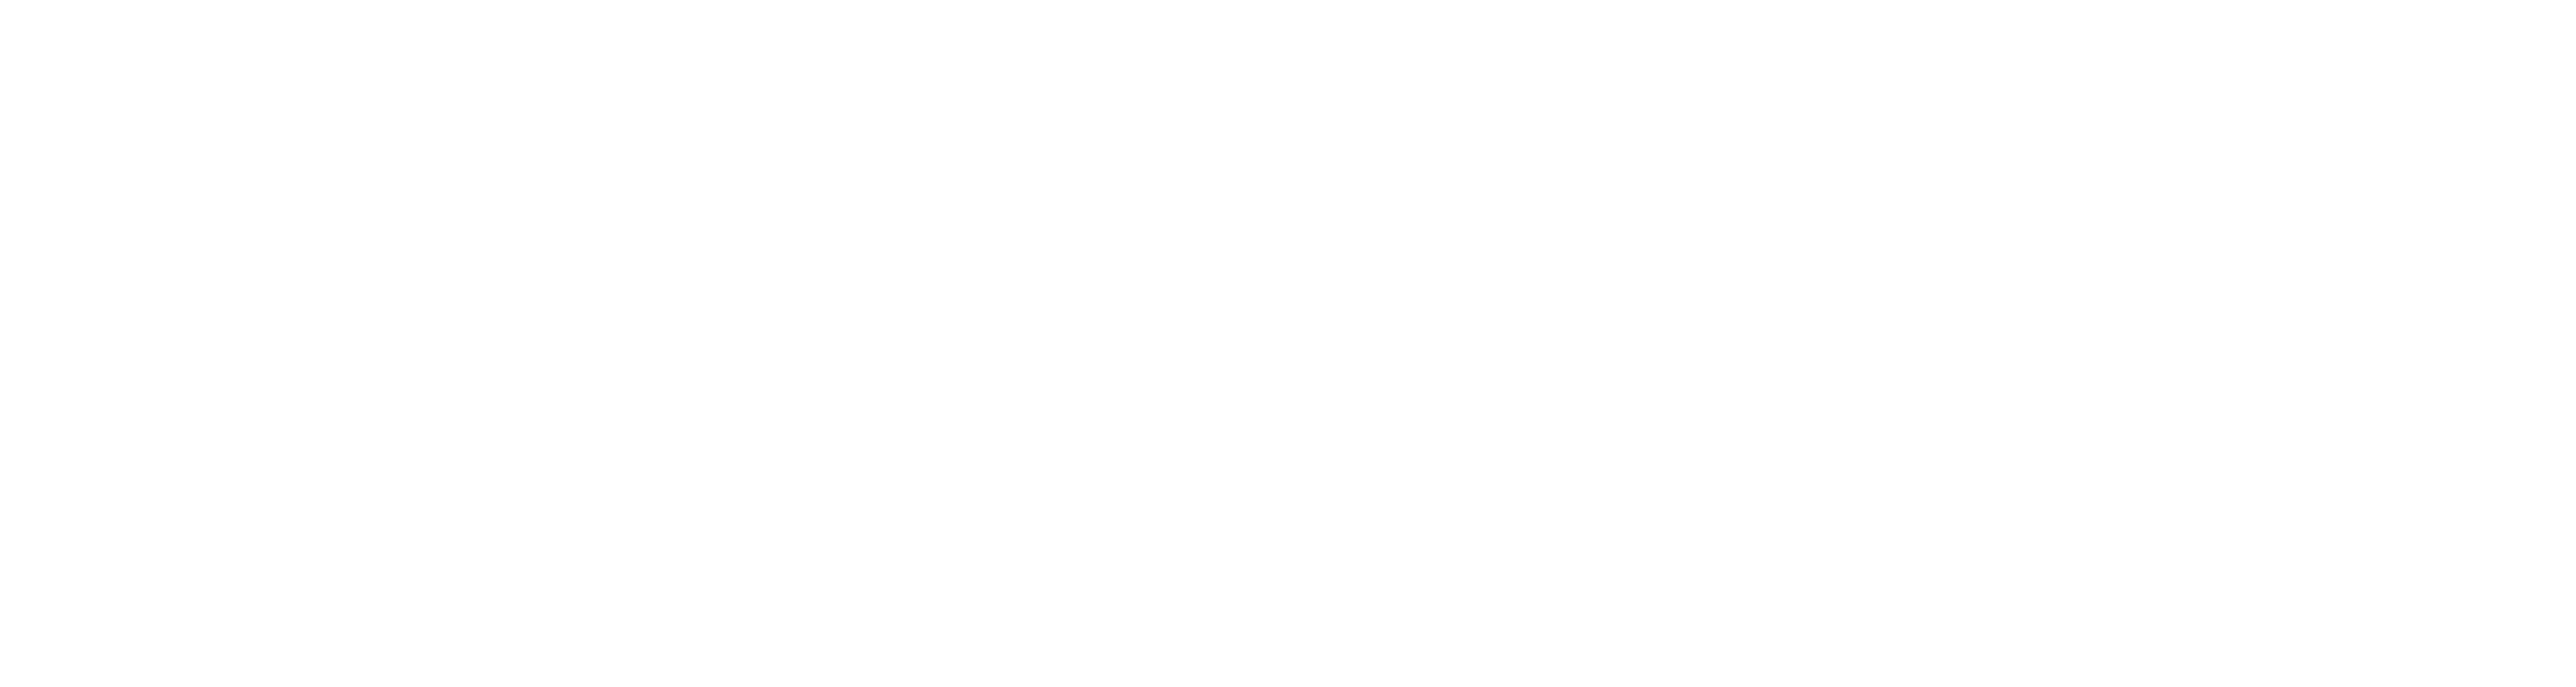 Accountancy Extra_All White Logo_RGB